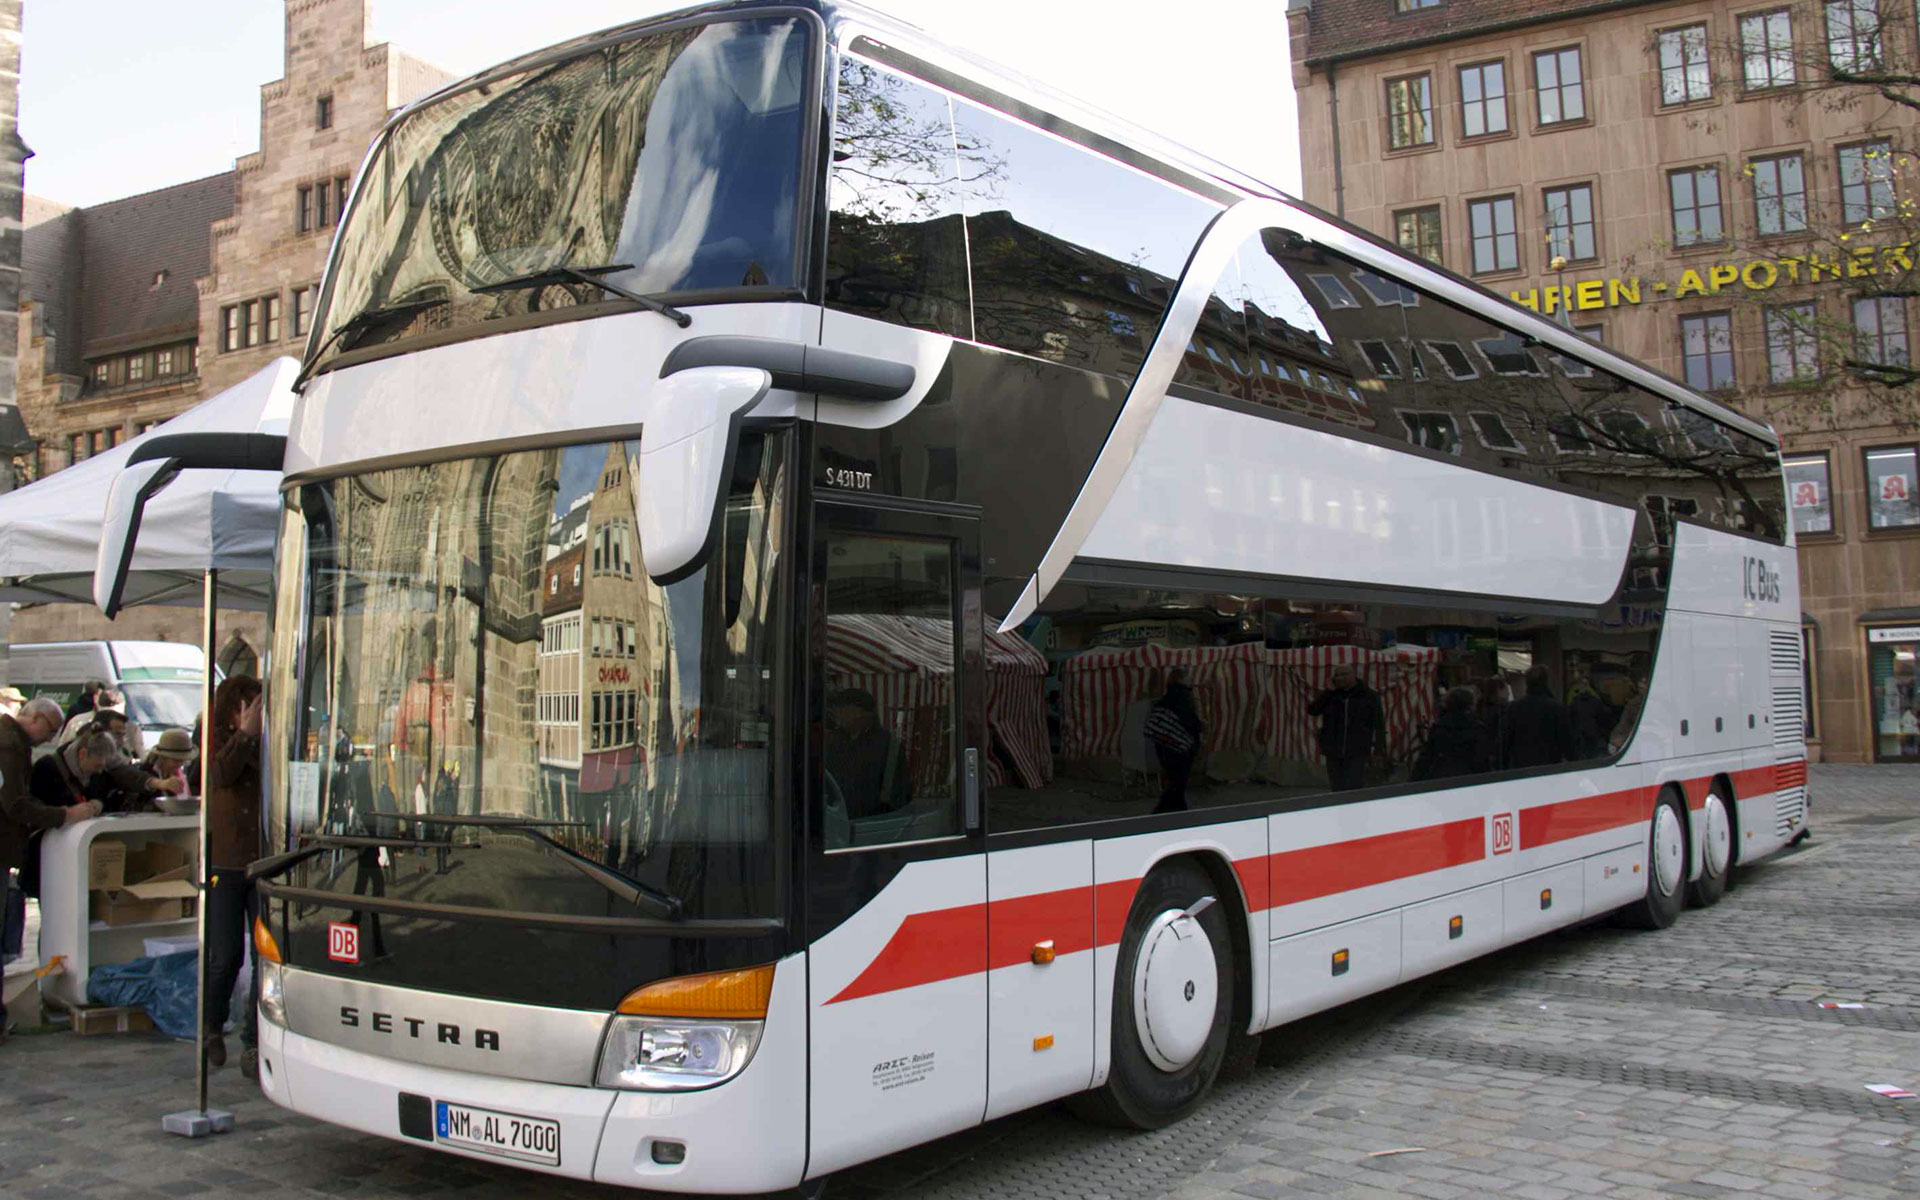 A Deutsche Bahn IC Bus service on the Nürnberg-Mannheim route, Germany (image by Mef.ellingen).